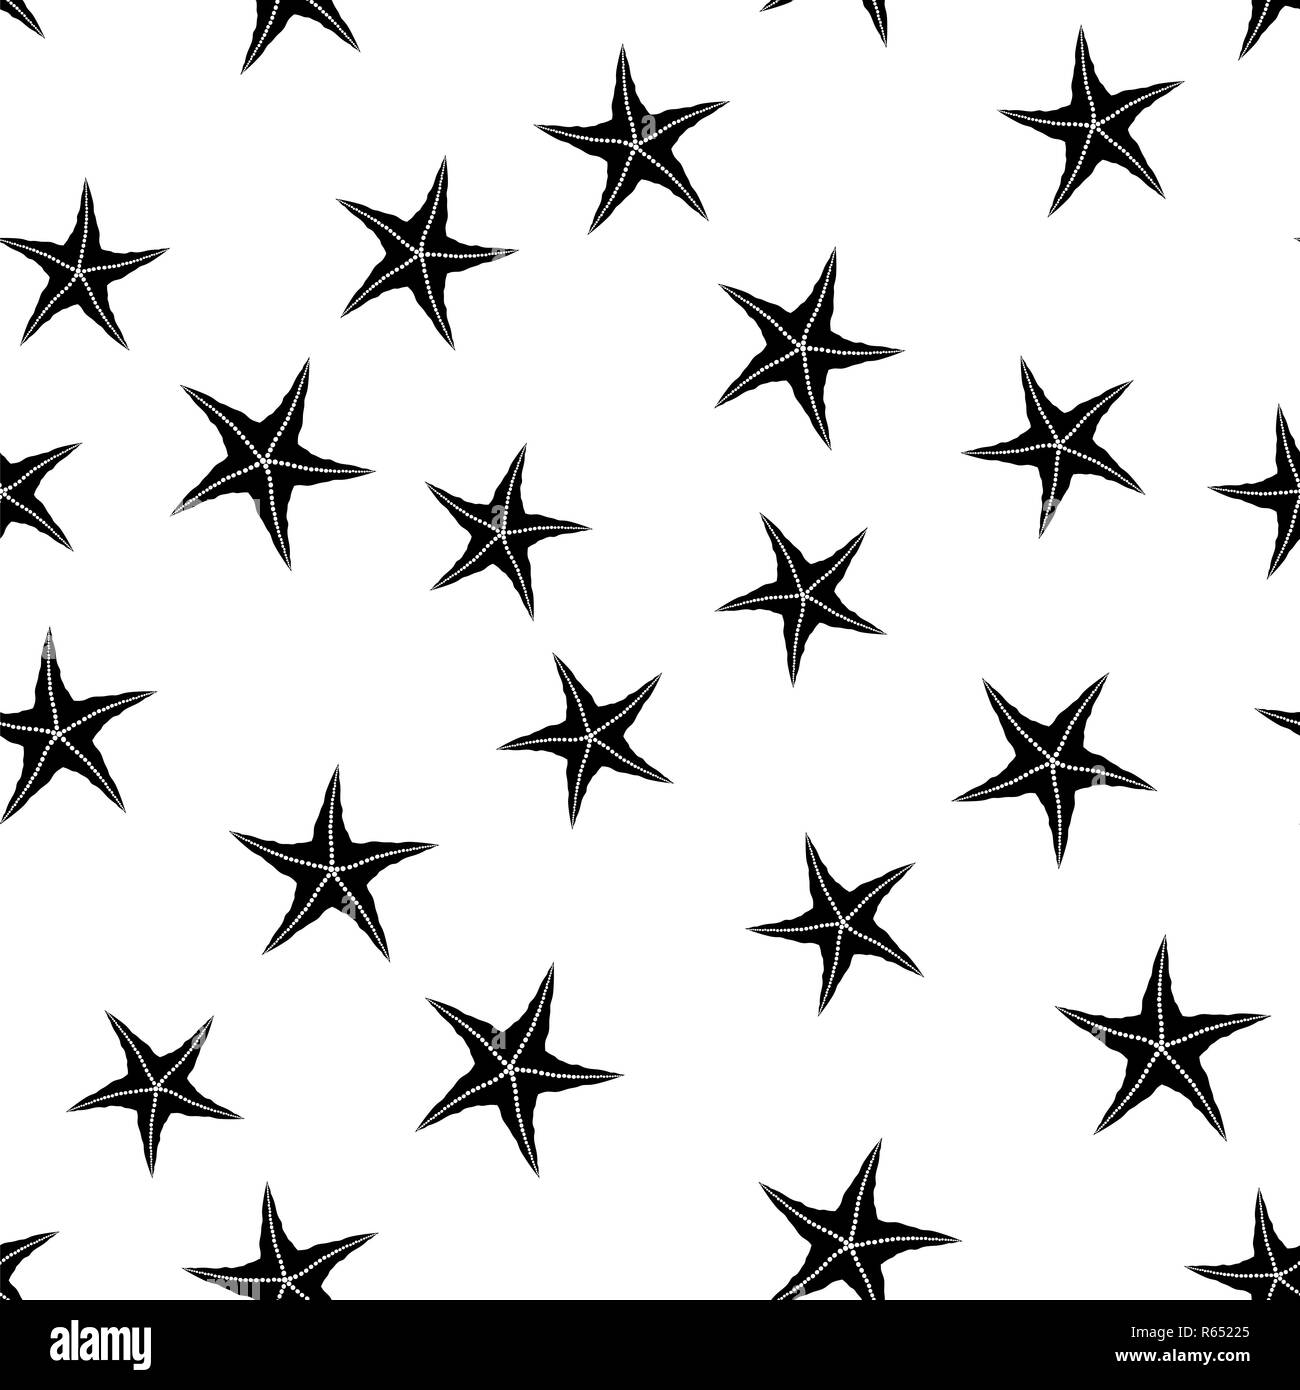 Starfish Silhouette Seamless Pattern Stock Photo